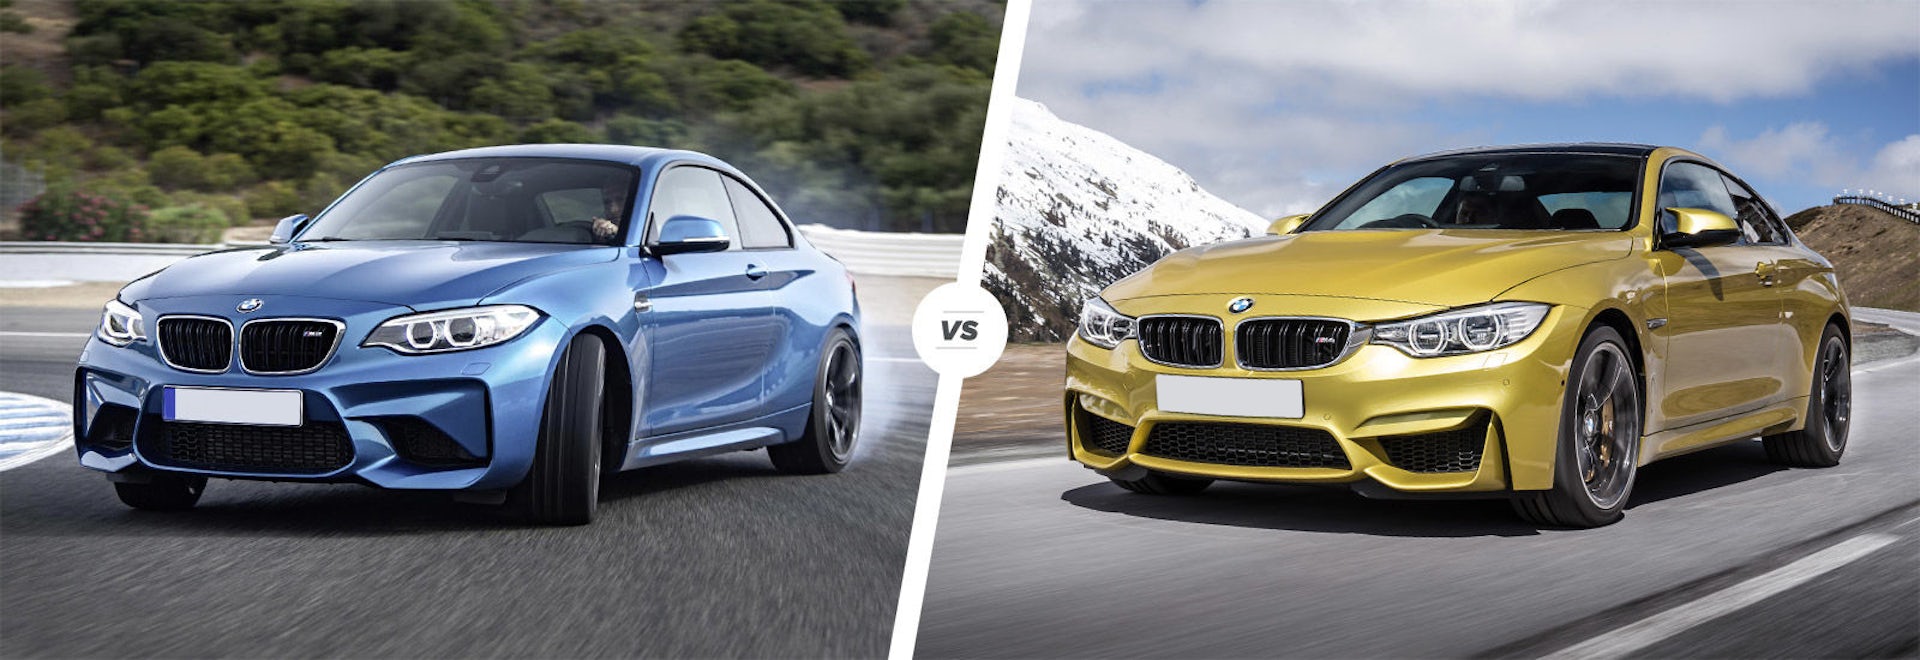 BMW M2 vs M4 sidebyside comparison carwow